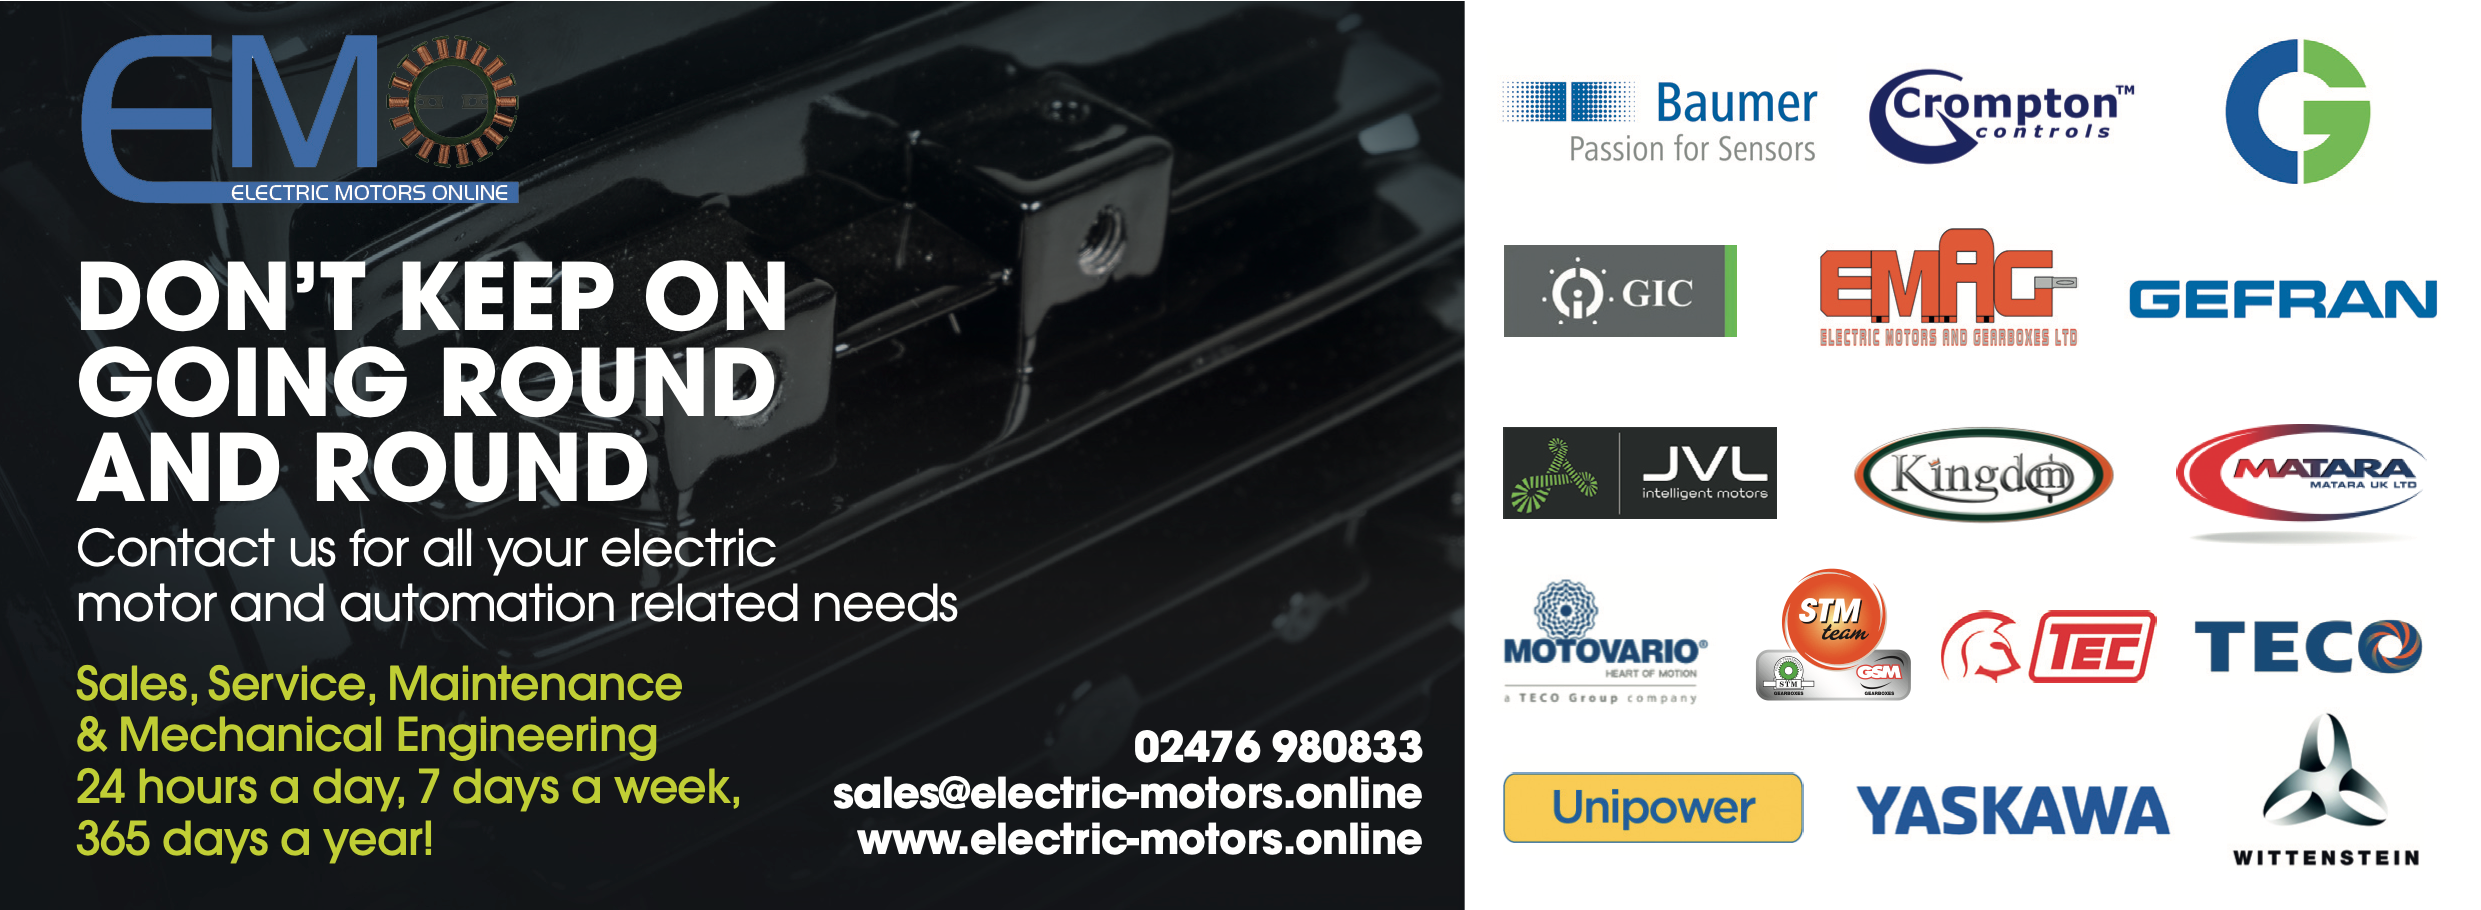 Electric Motors Online | Based in Warwickshire